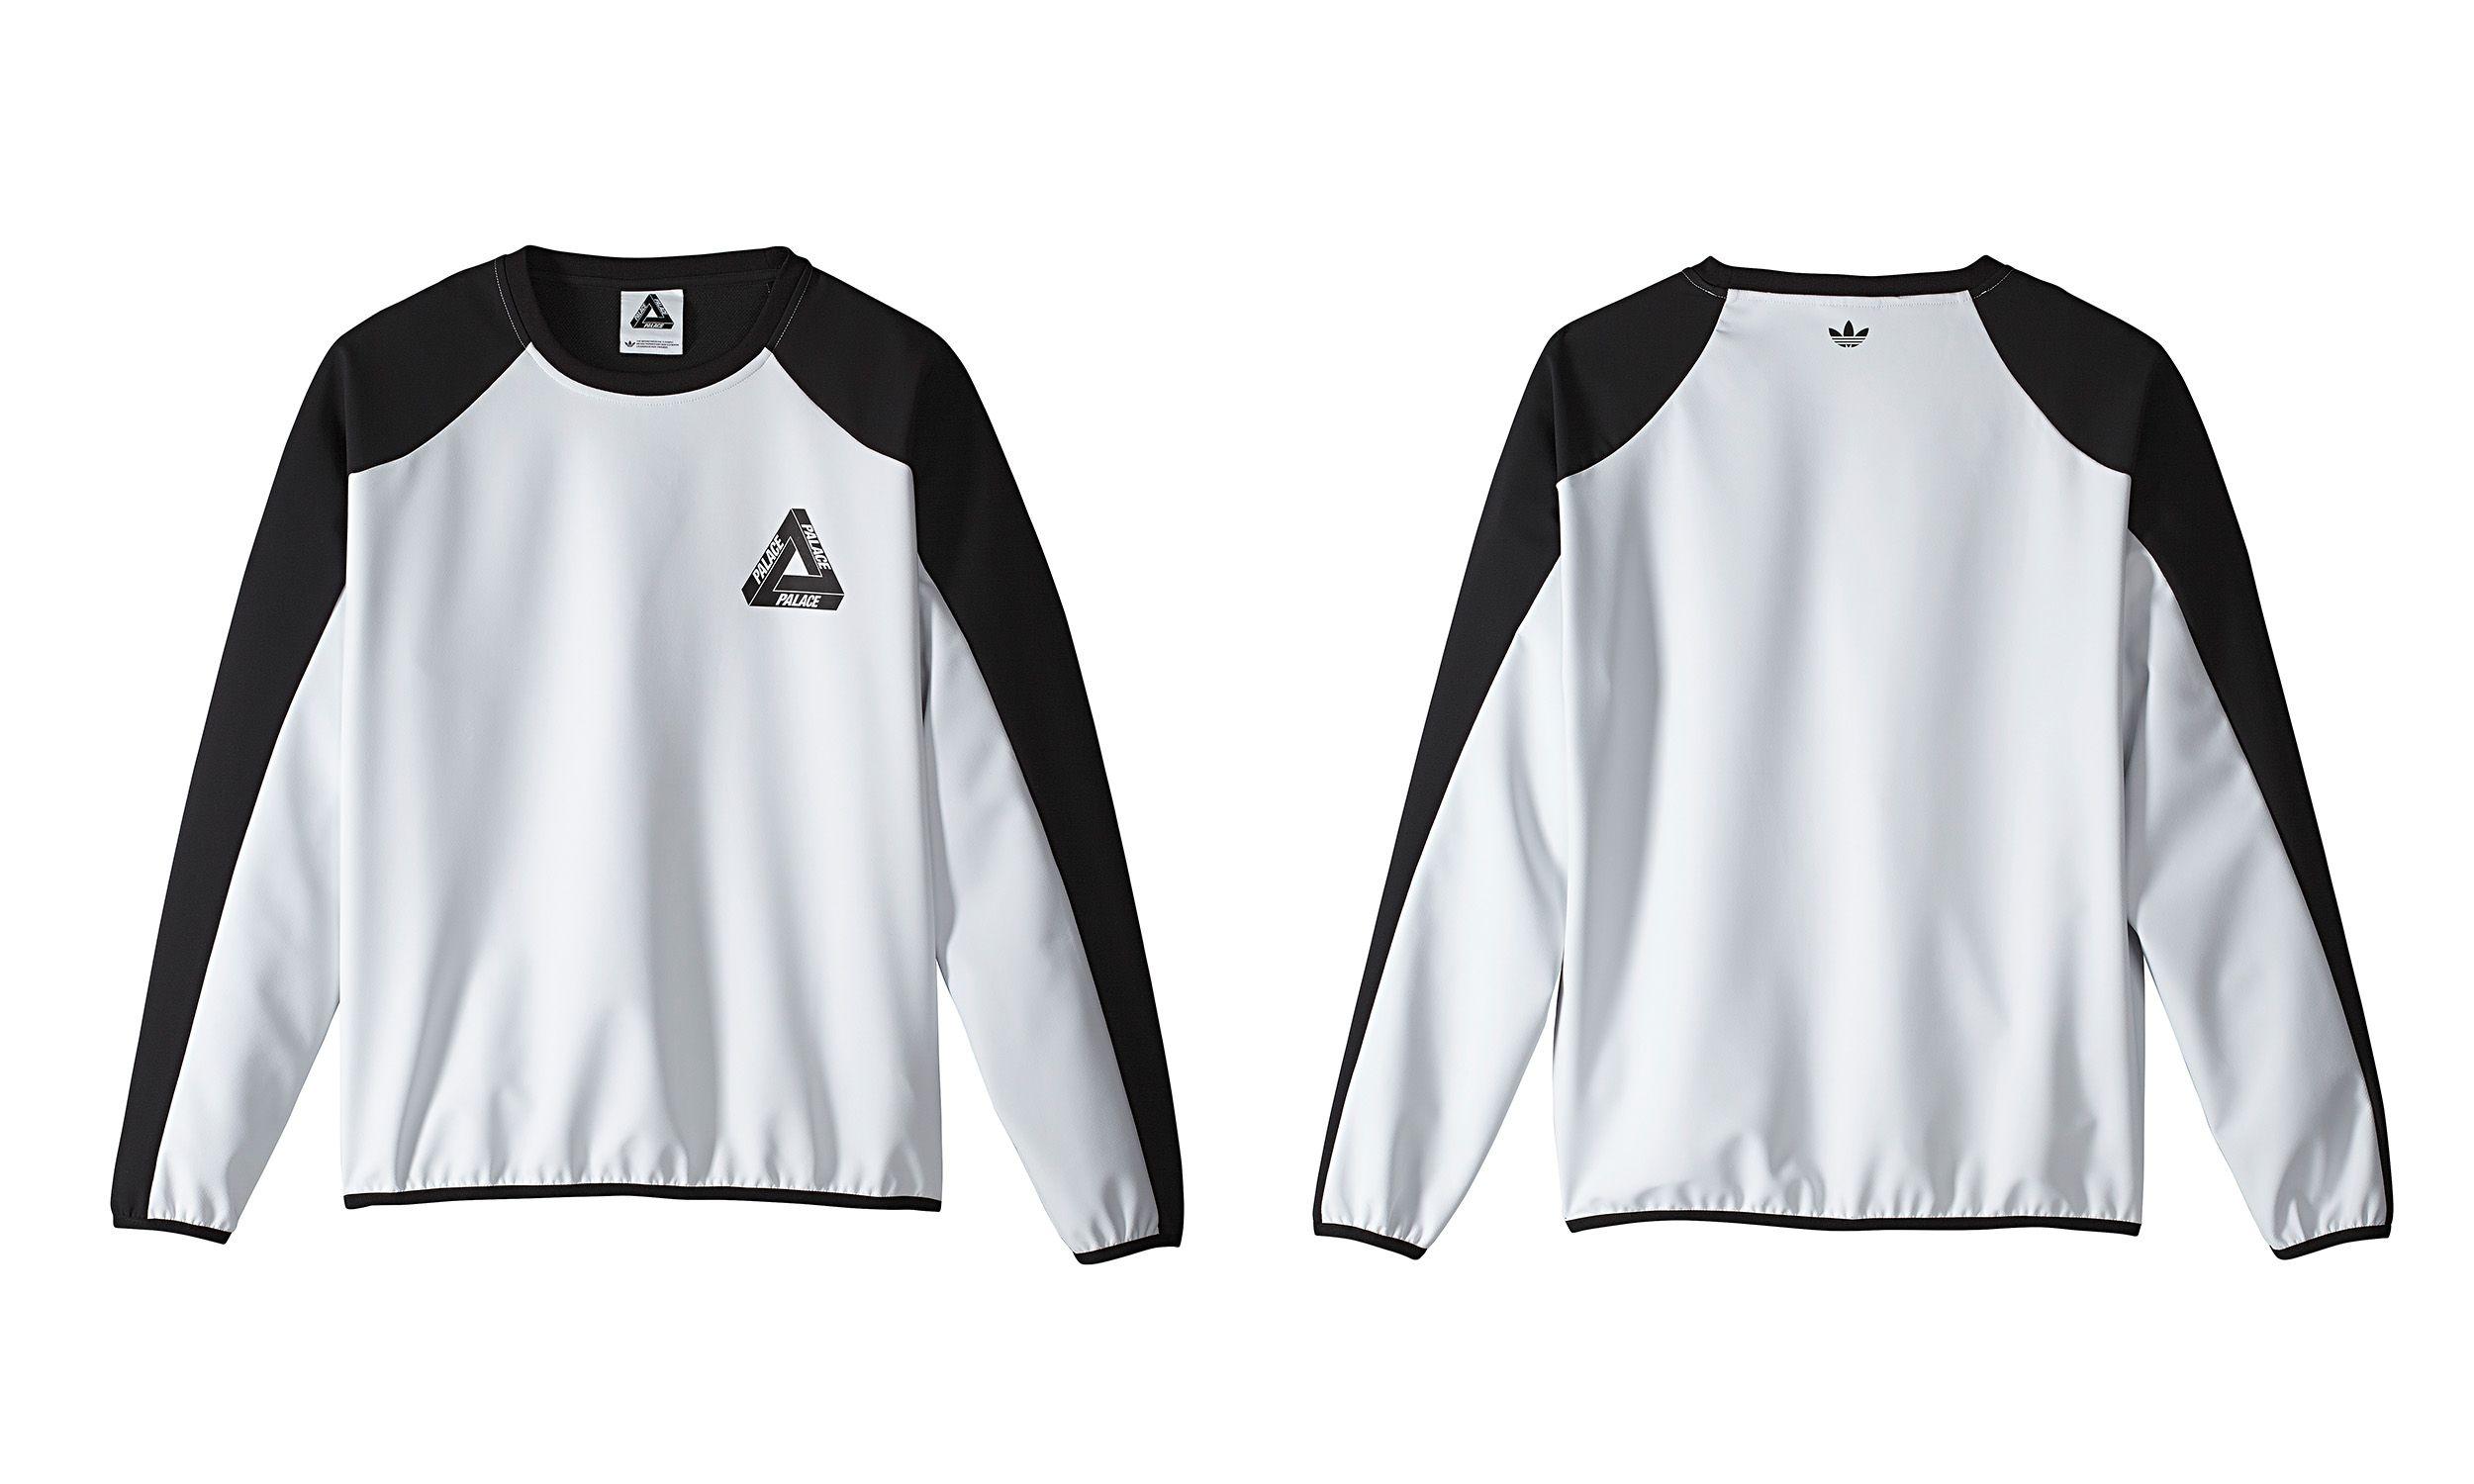 Adidas X Palace Clothing Logo - A Closer Look At the Palace Skateboards x adidas Originals F/W 2015 ...